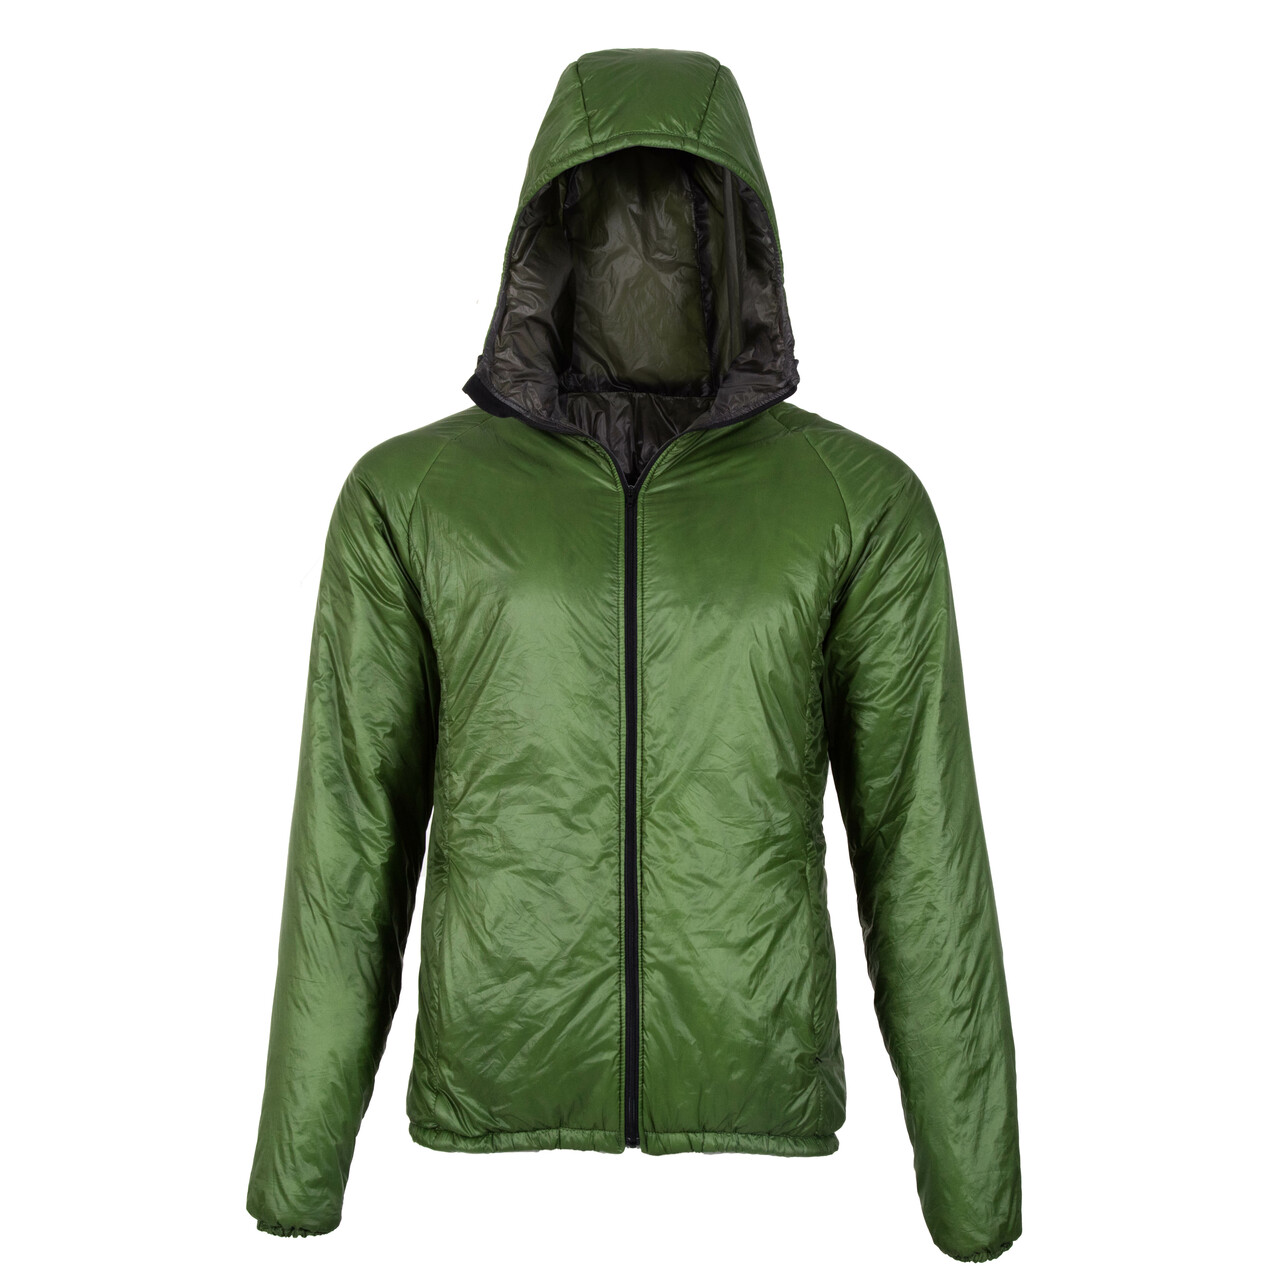 Torrid Jacket | Ultralight Ultra-warm Insulated Jacket